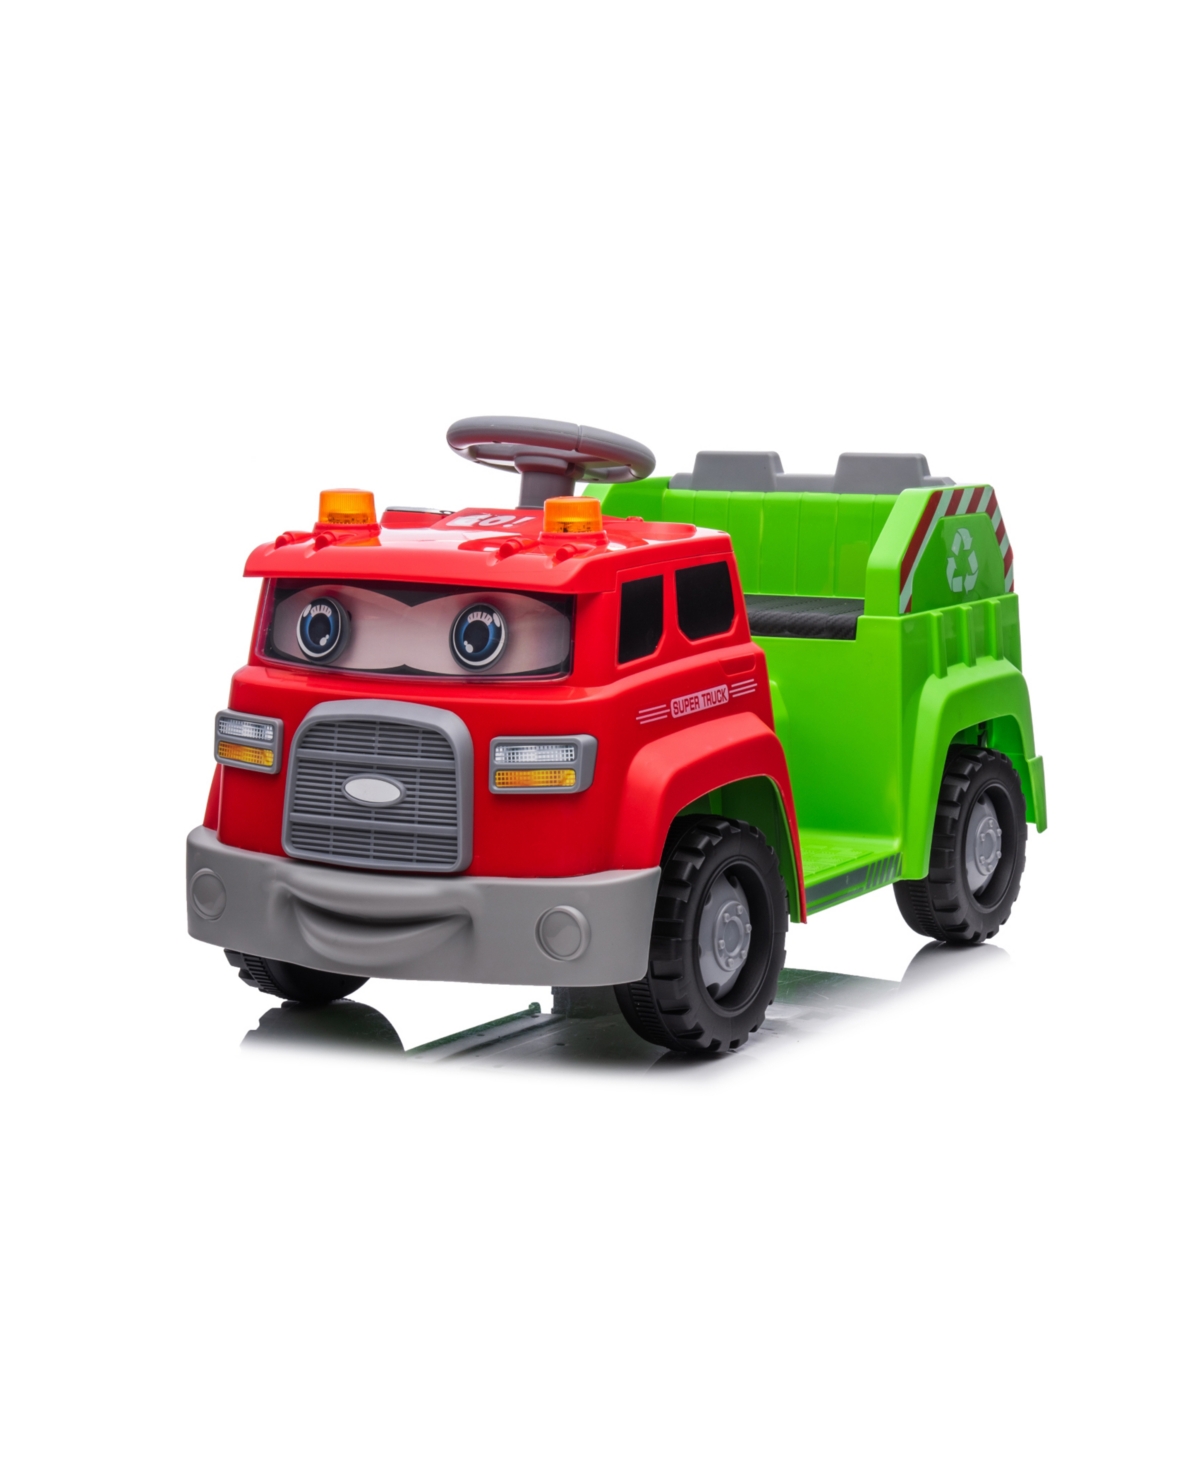 Freddo 12v Dump Truck In Red